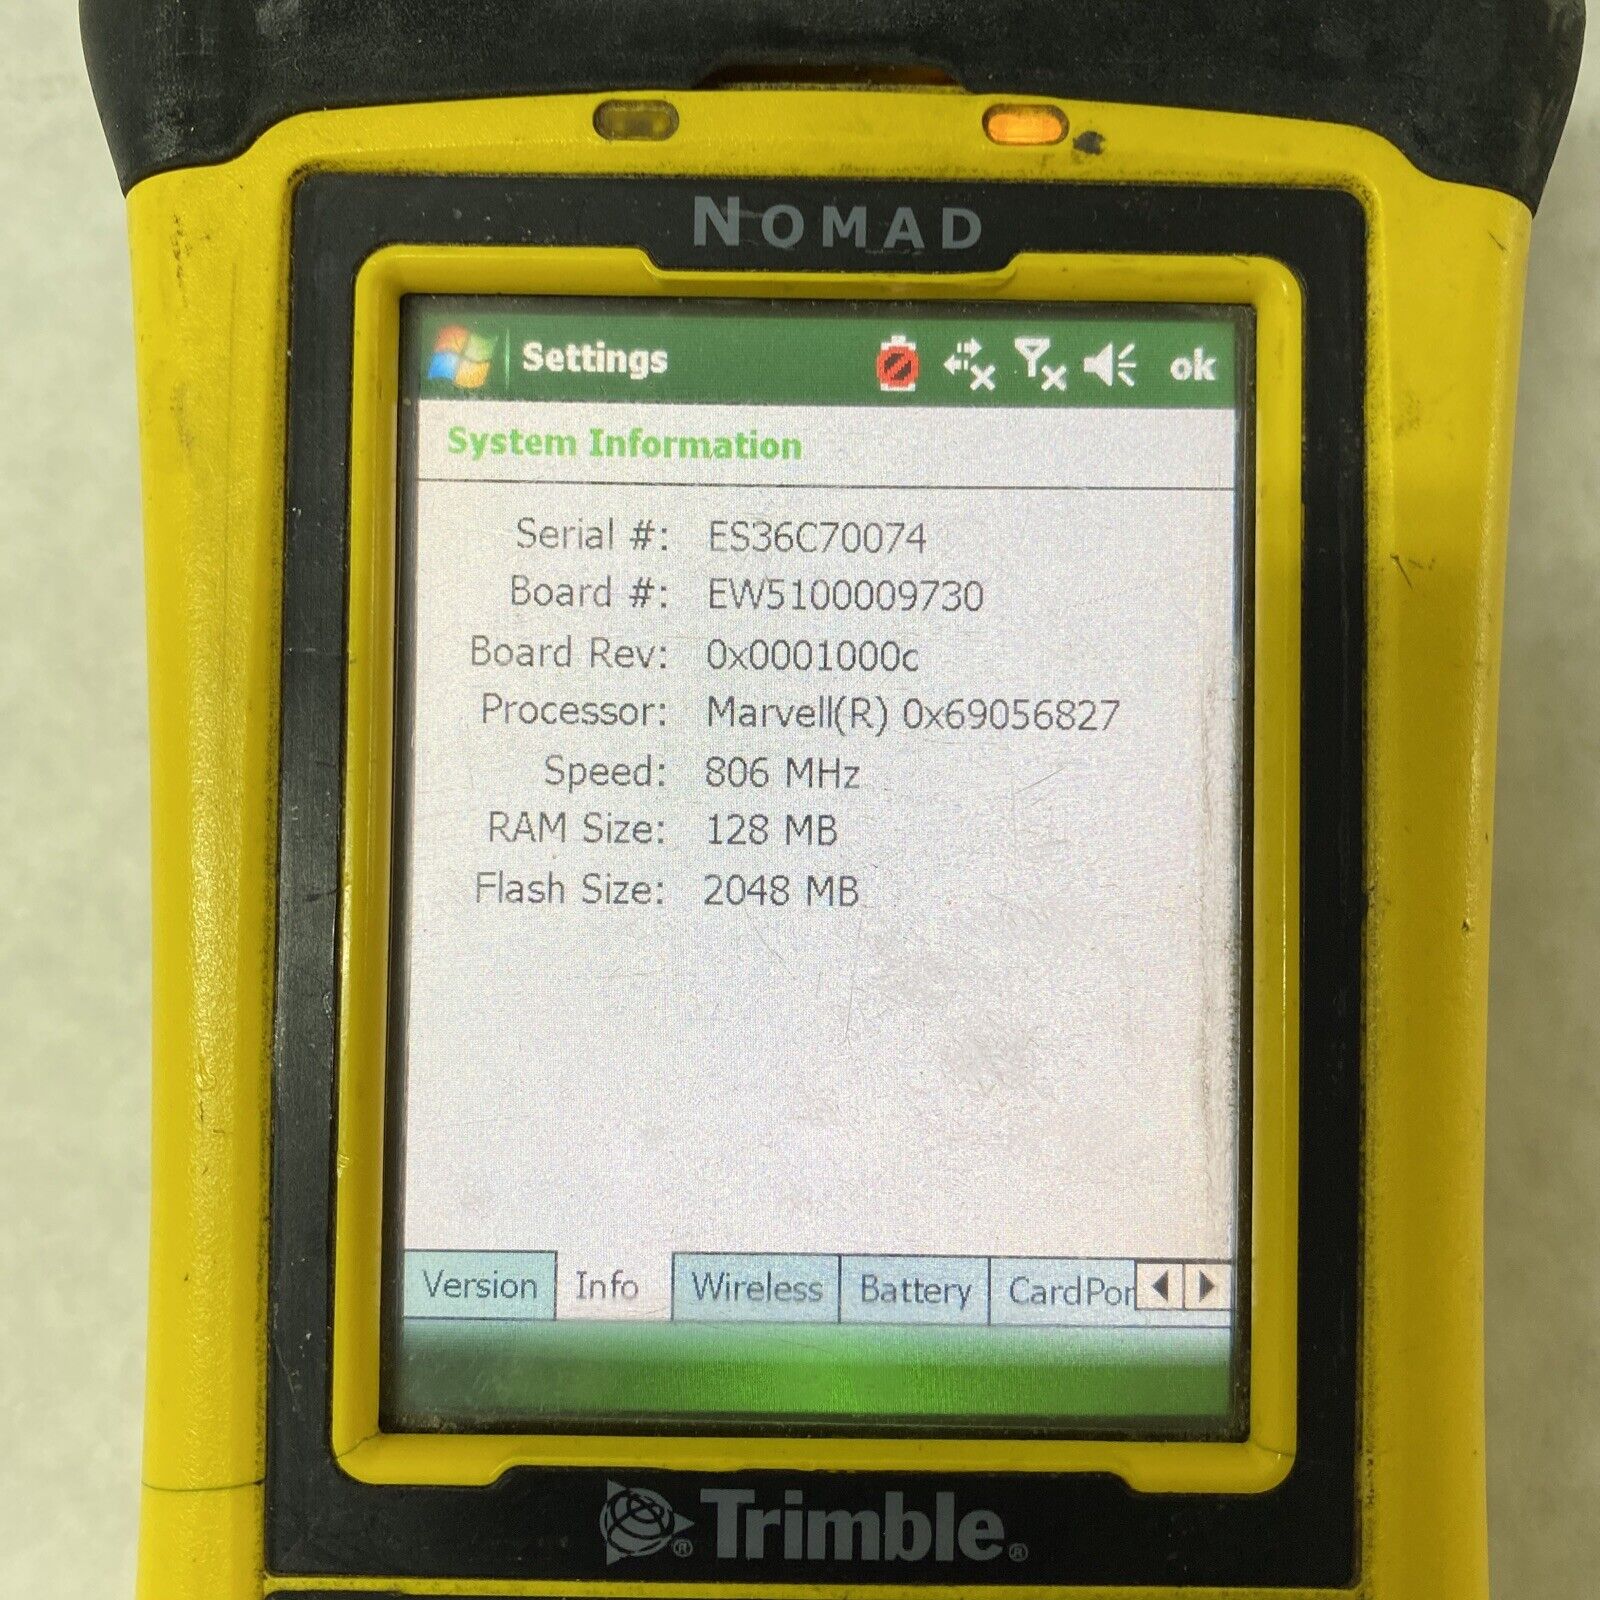 Trimble Nomad Data Collector Scanner Windows 6.1 Bluetooth GPS (f)